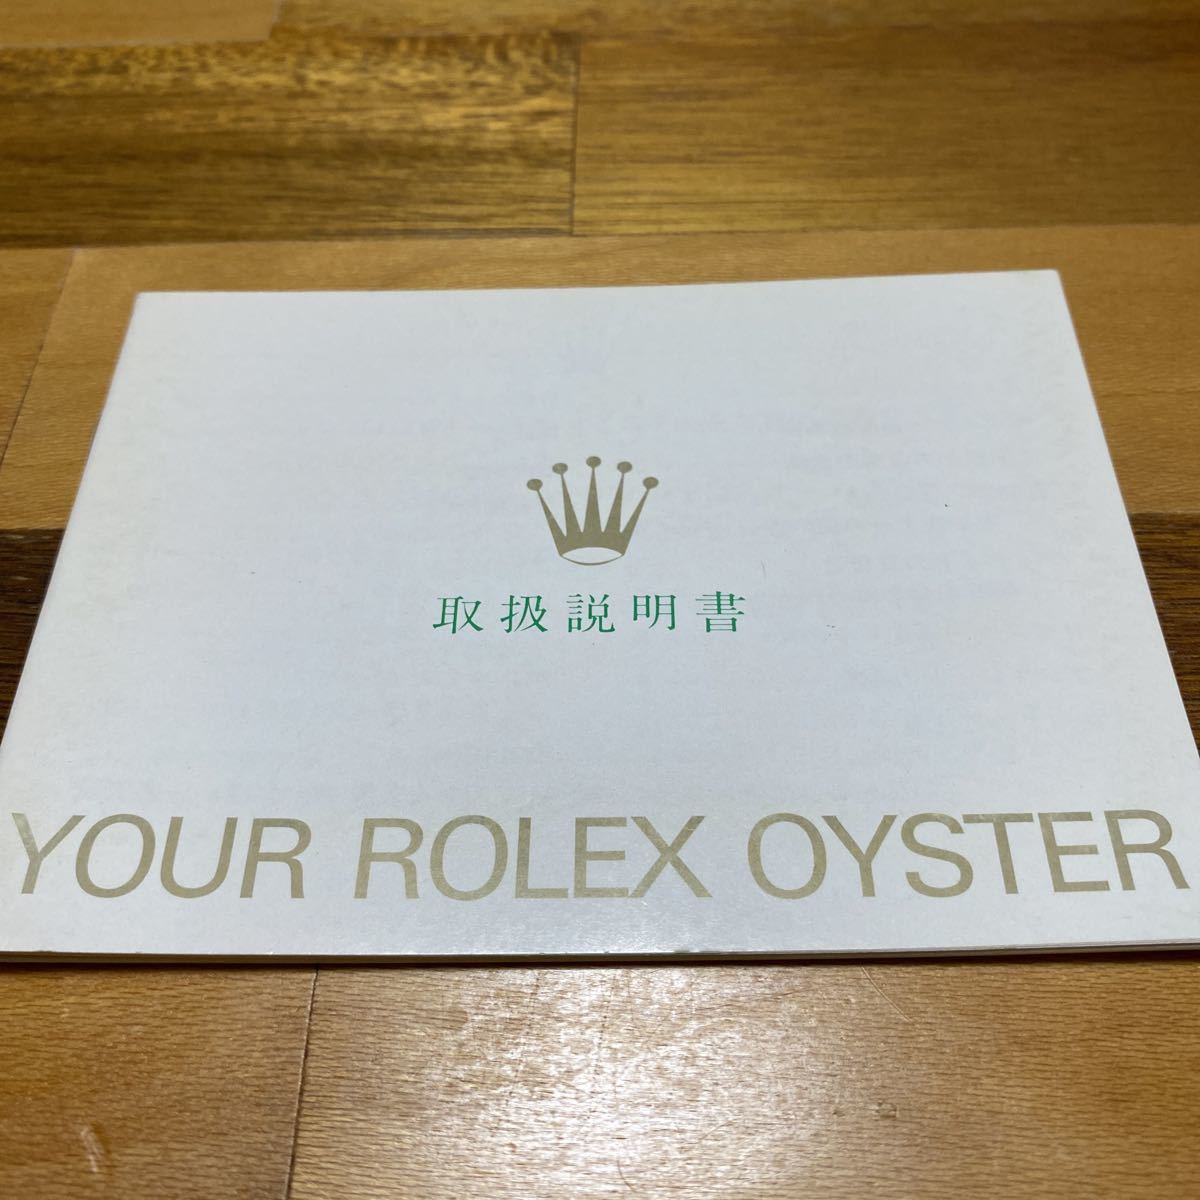 2681【希少必見】ロレックス 取扱説明書 Rolex 定形郵便94円可能_画像1